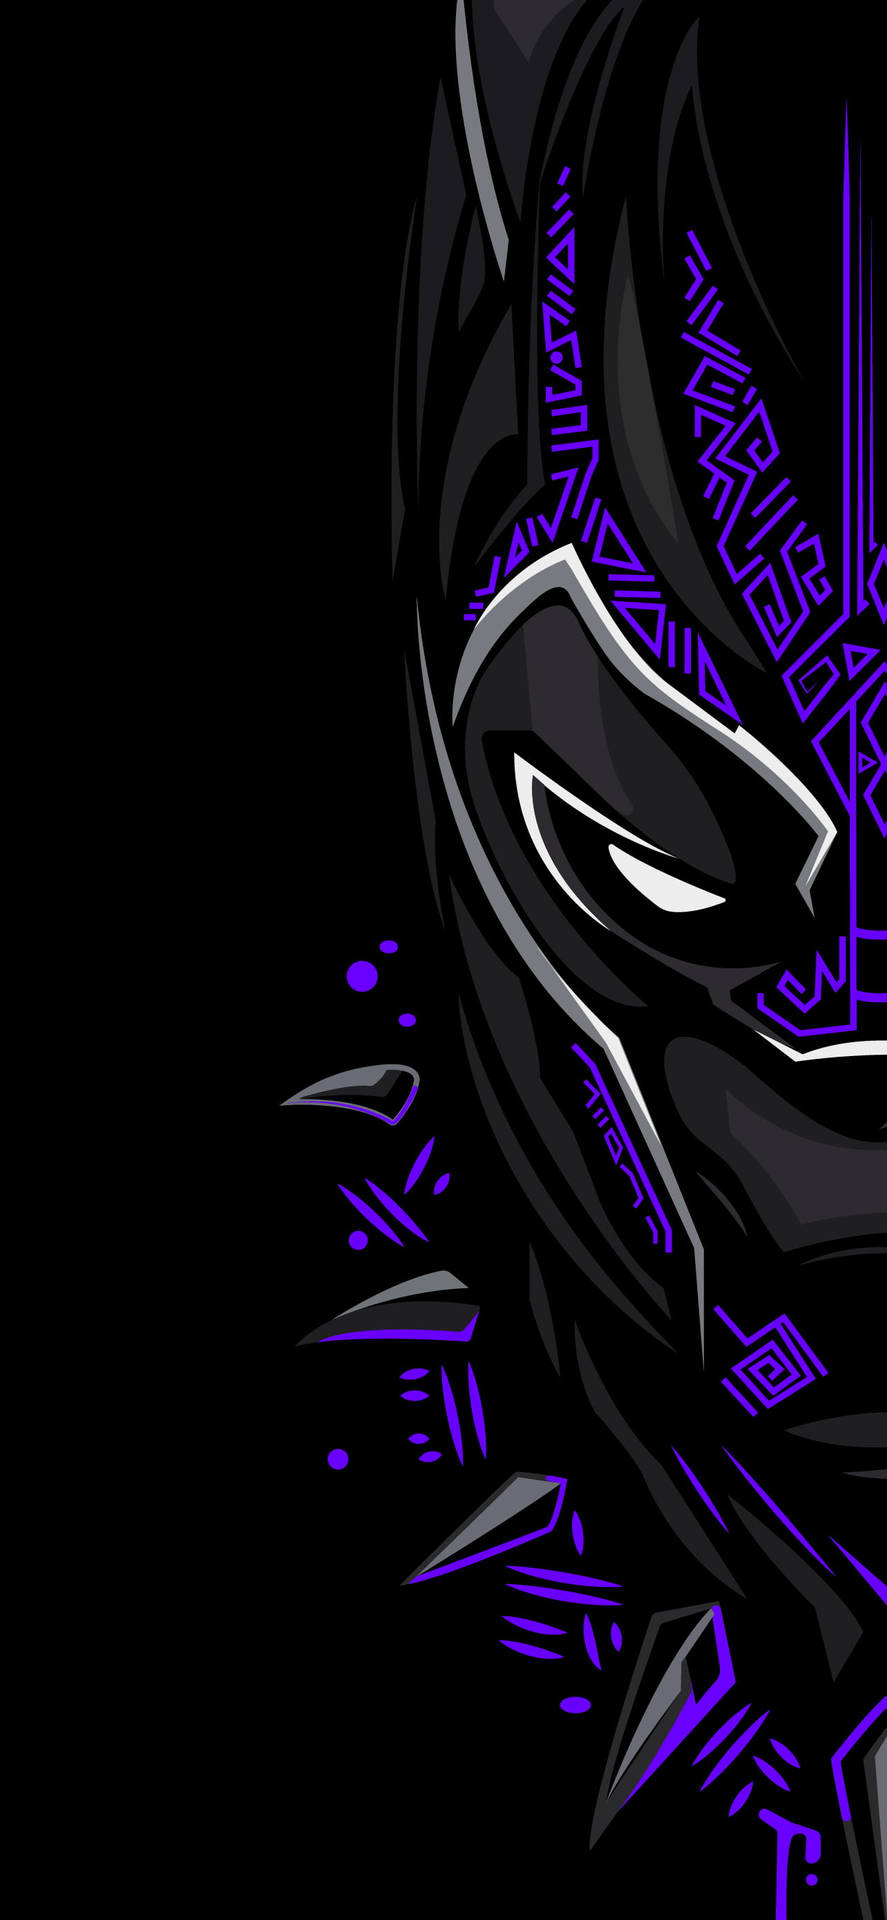 Sick Phone Black Panther Face Wallpaper